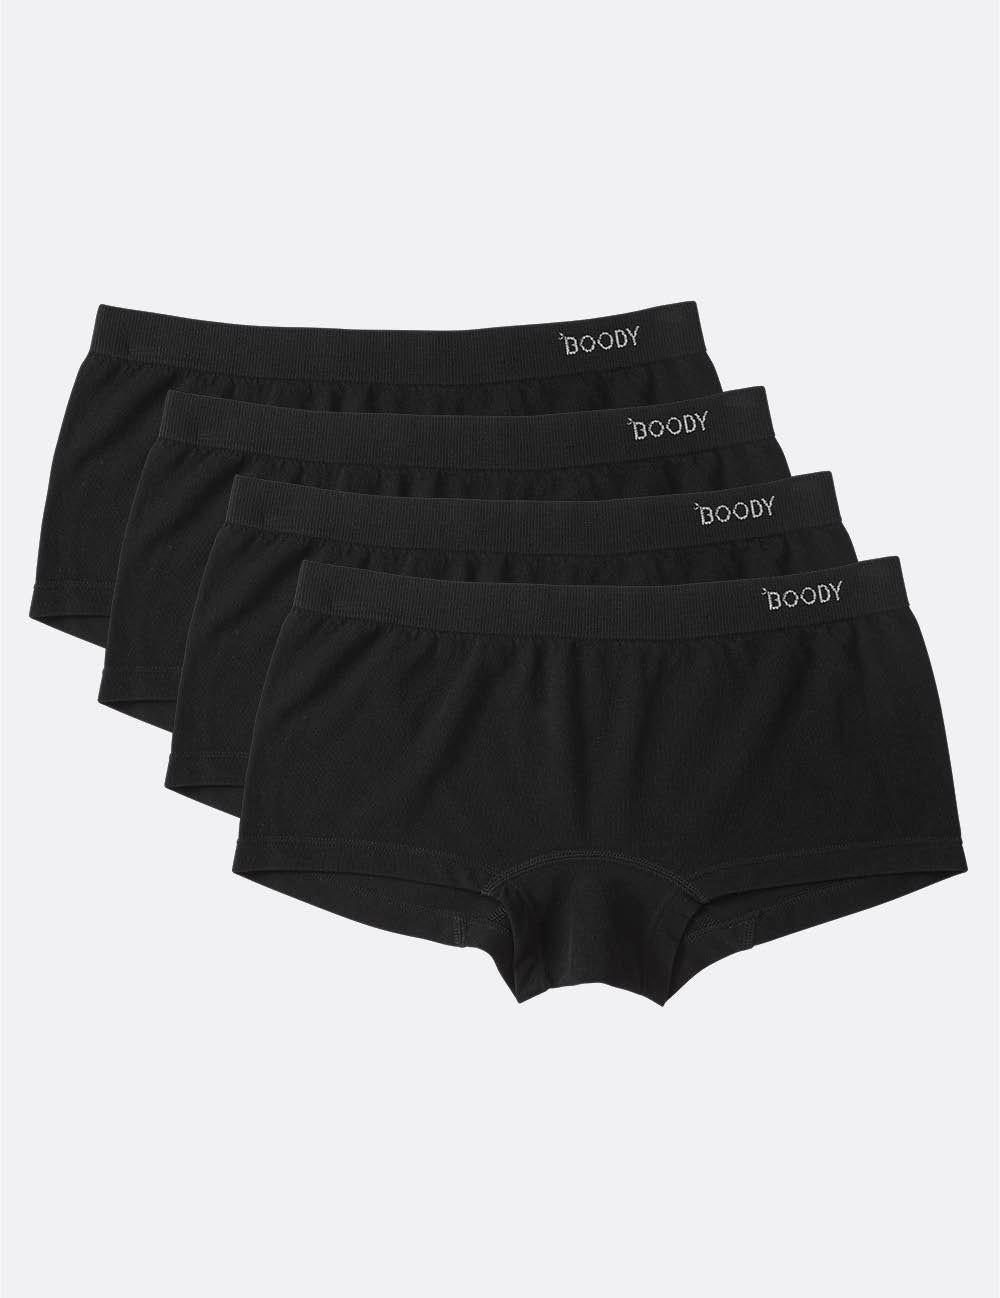 Boody Bamboo Boyleg Brief Boy Short Womens Underwear in Black 4-pack Flat Lay